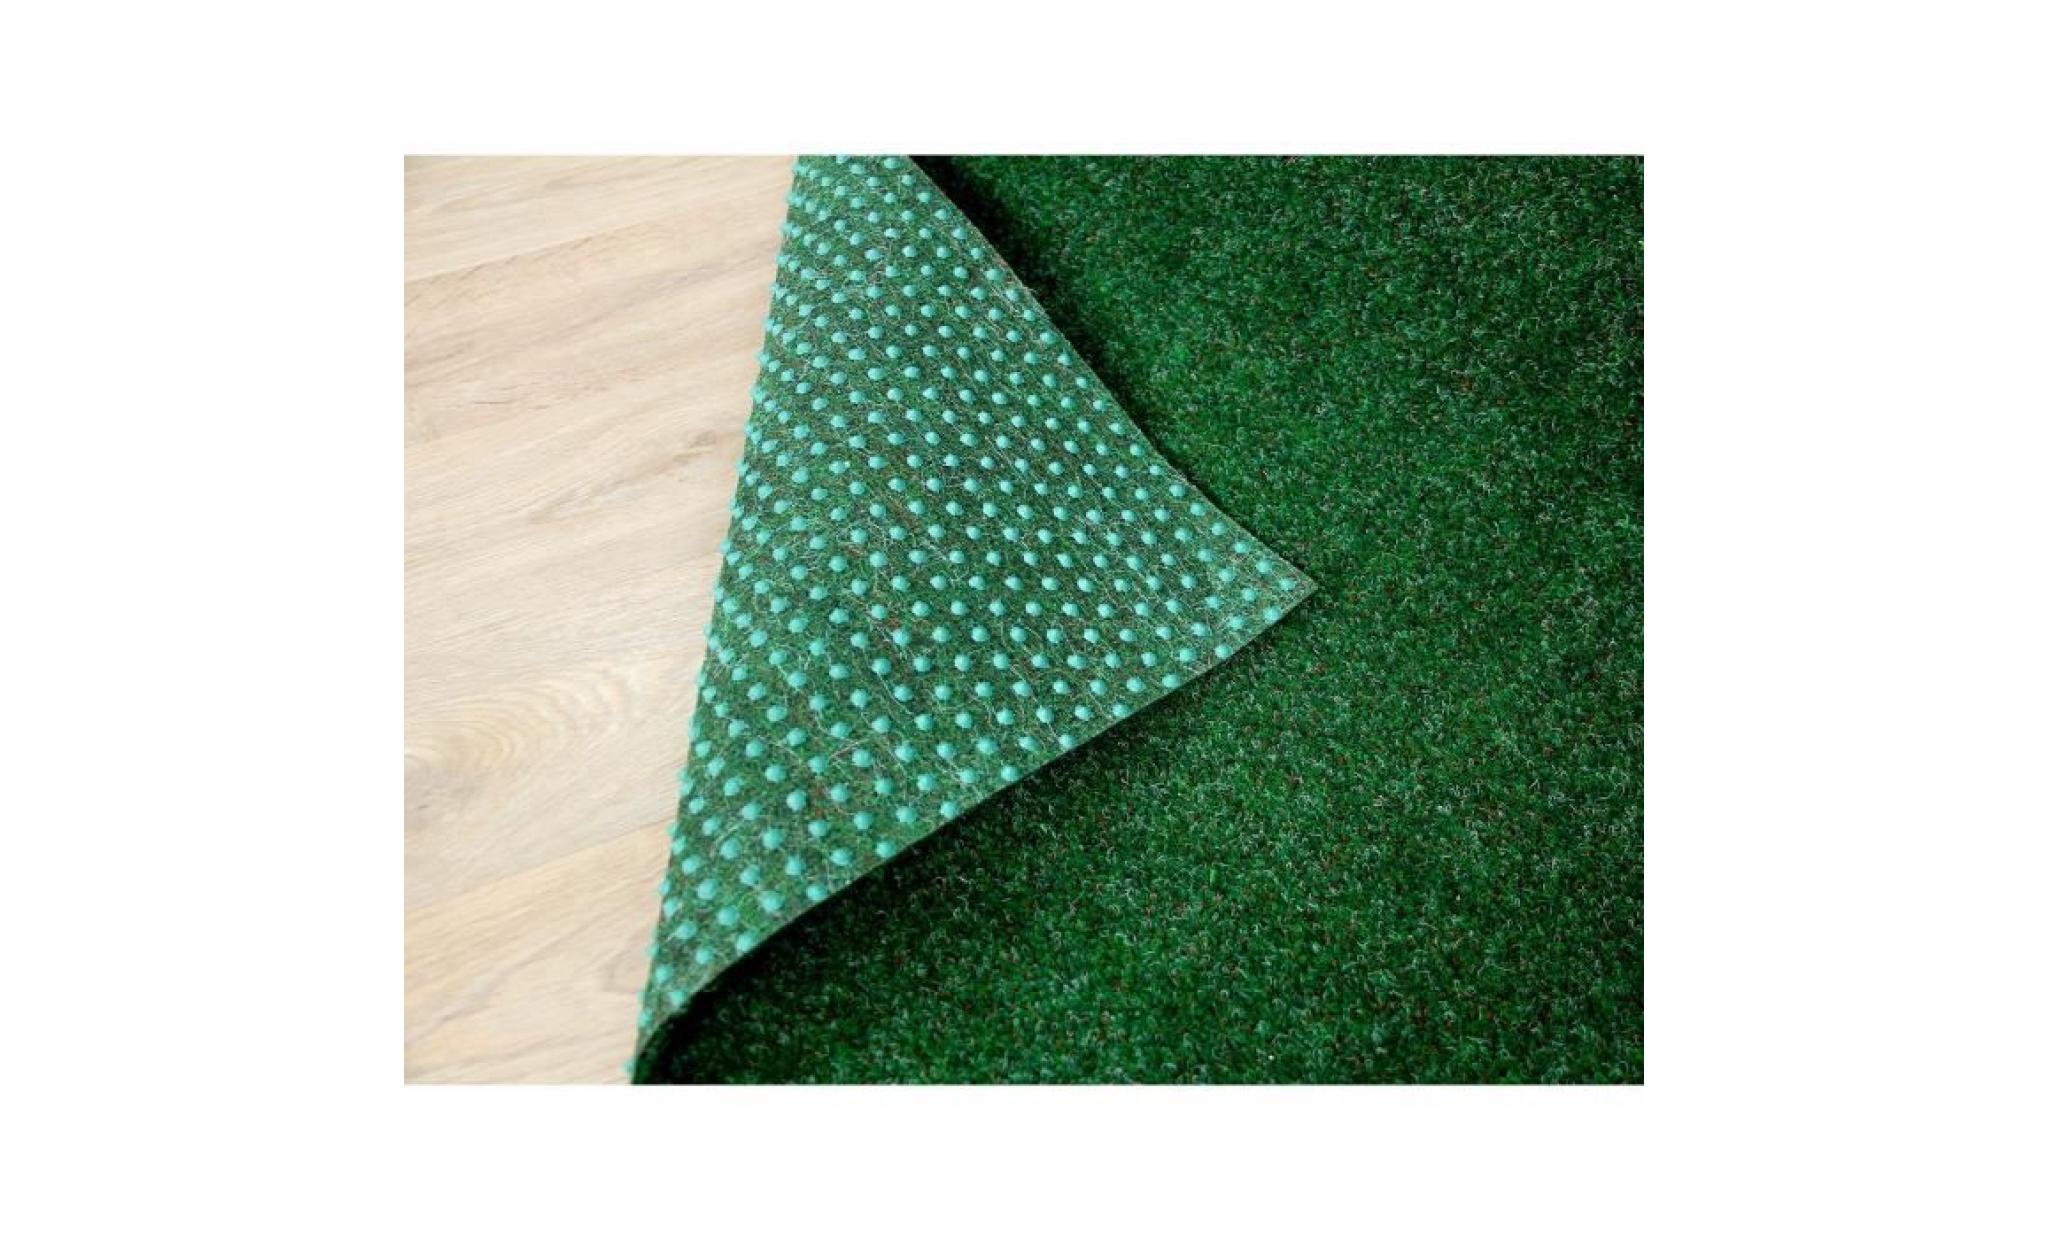 kingston   tapis type gazon artificiel – pour jardin, terrasse, balcon   anthracite [200x300 cm] pas cher